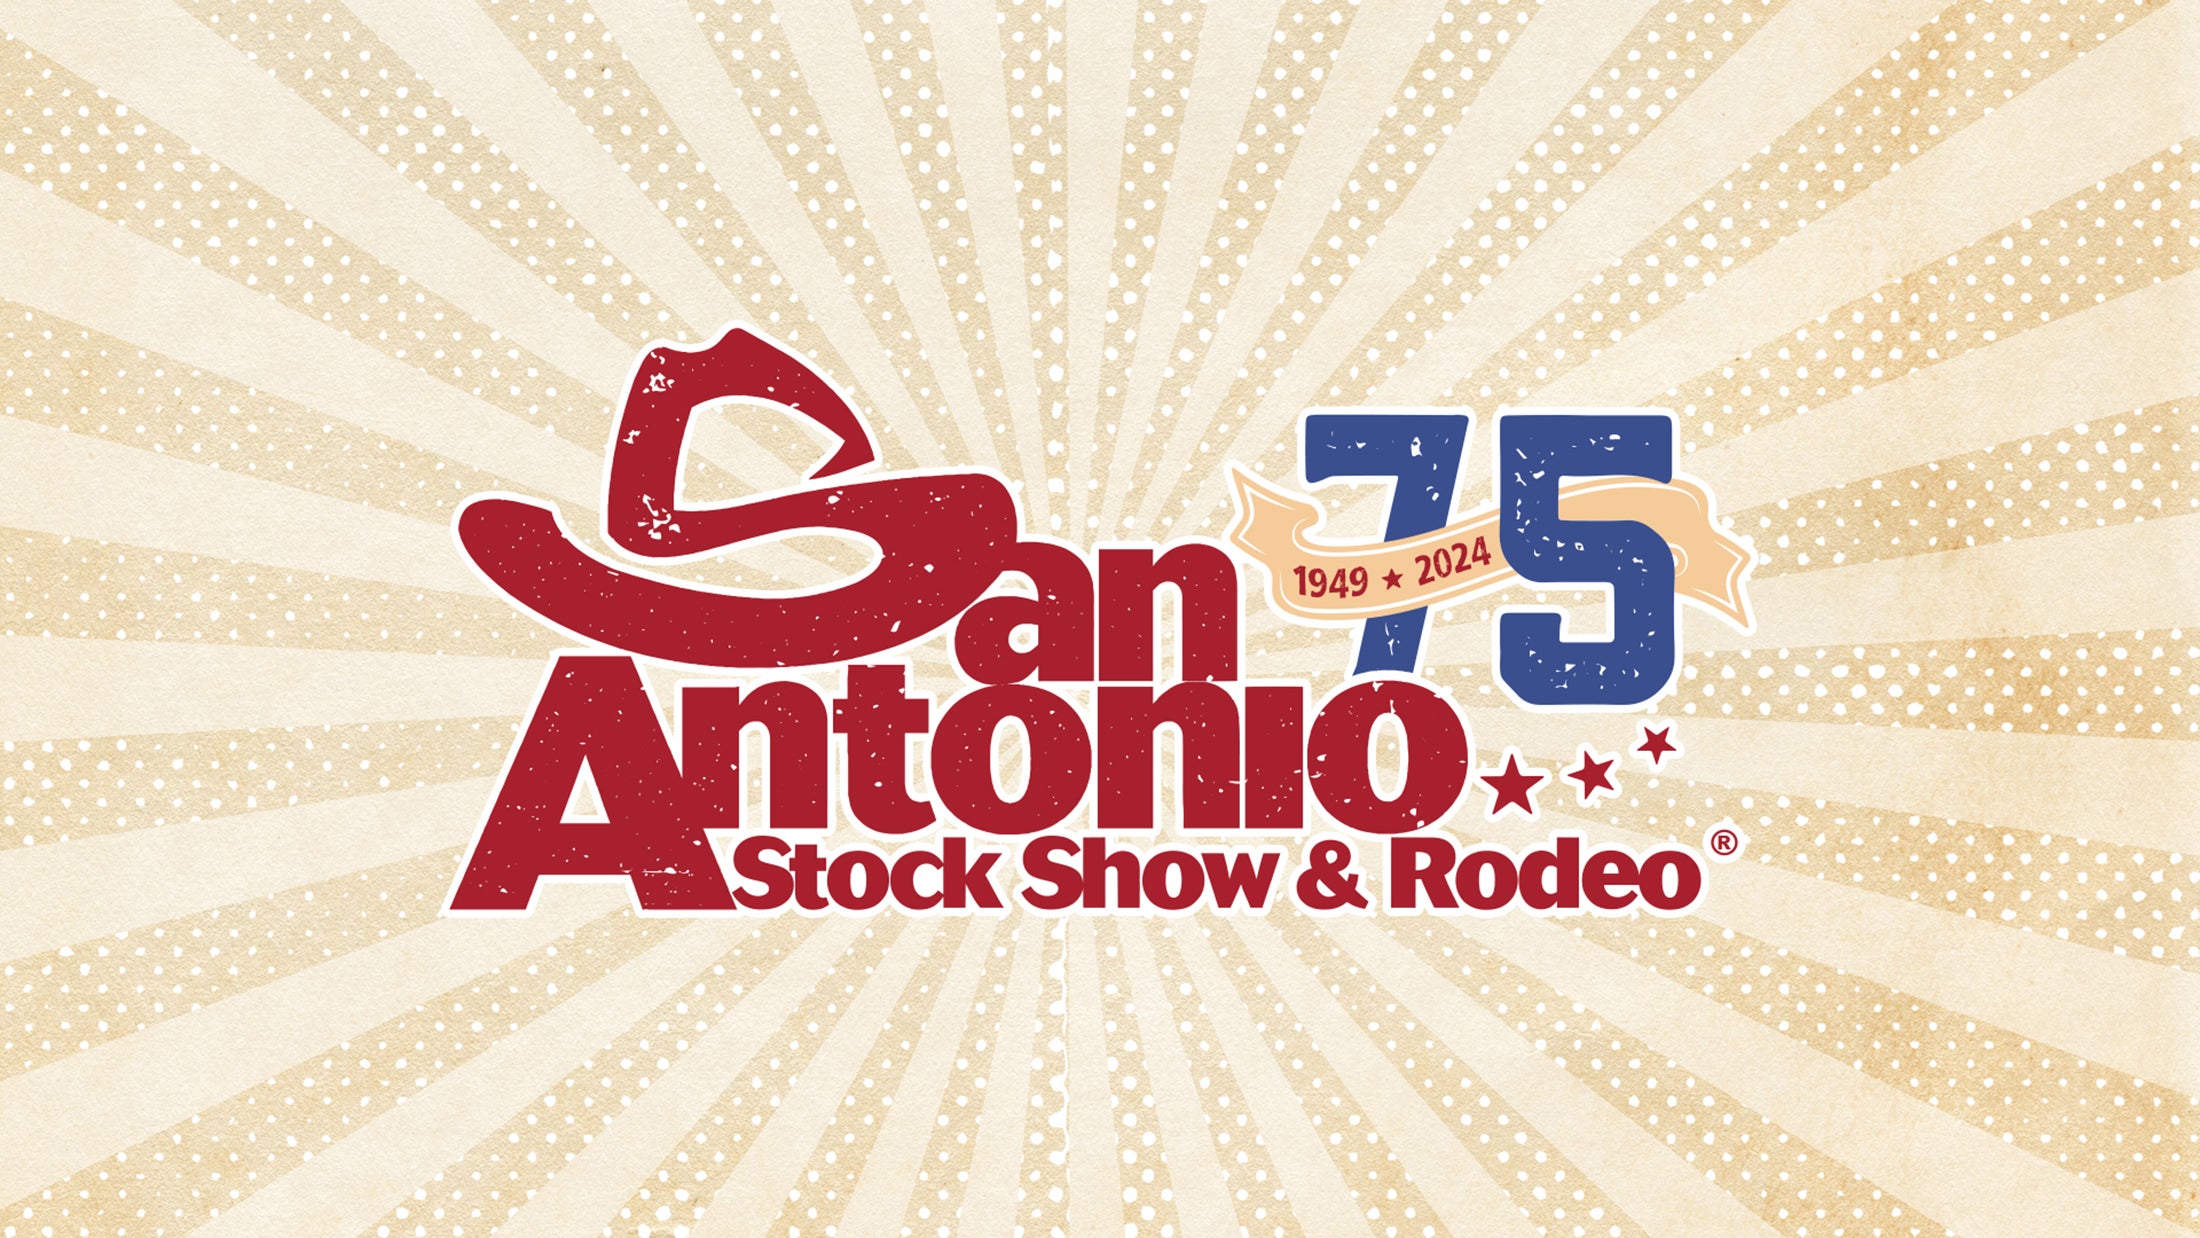 San Antonio Stock Show & Rodeo followed by Old Dominion in San Antonio promo photo for Artist Fan Club presale offer code